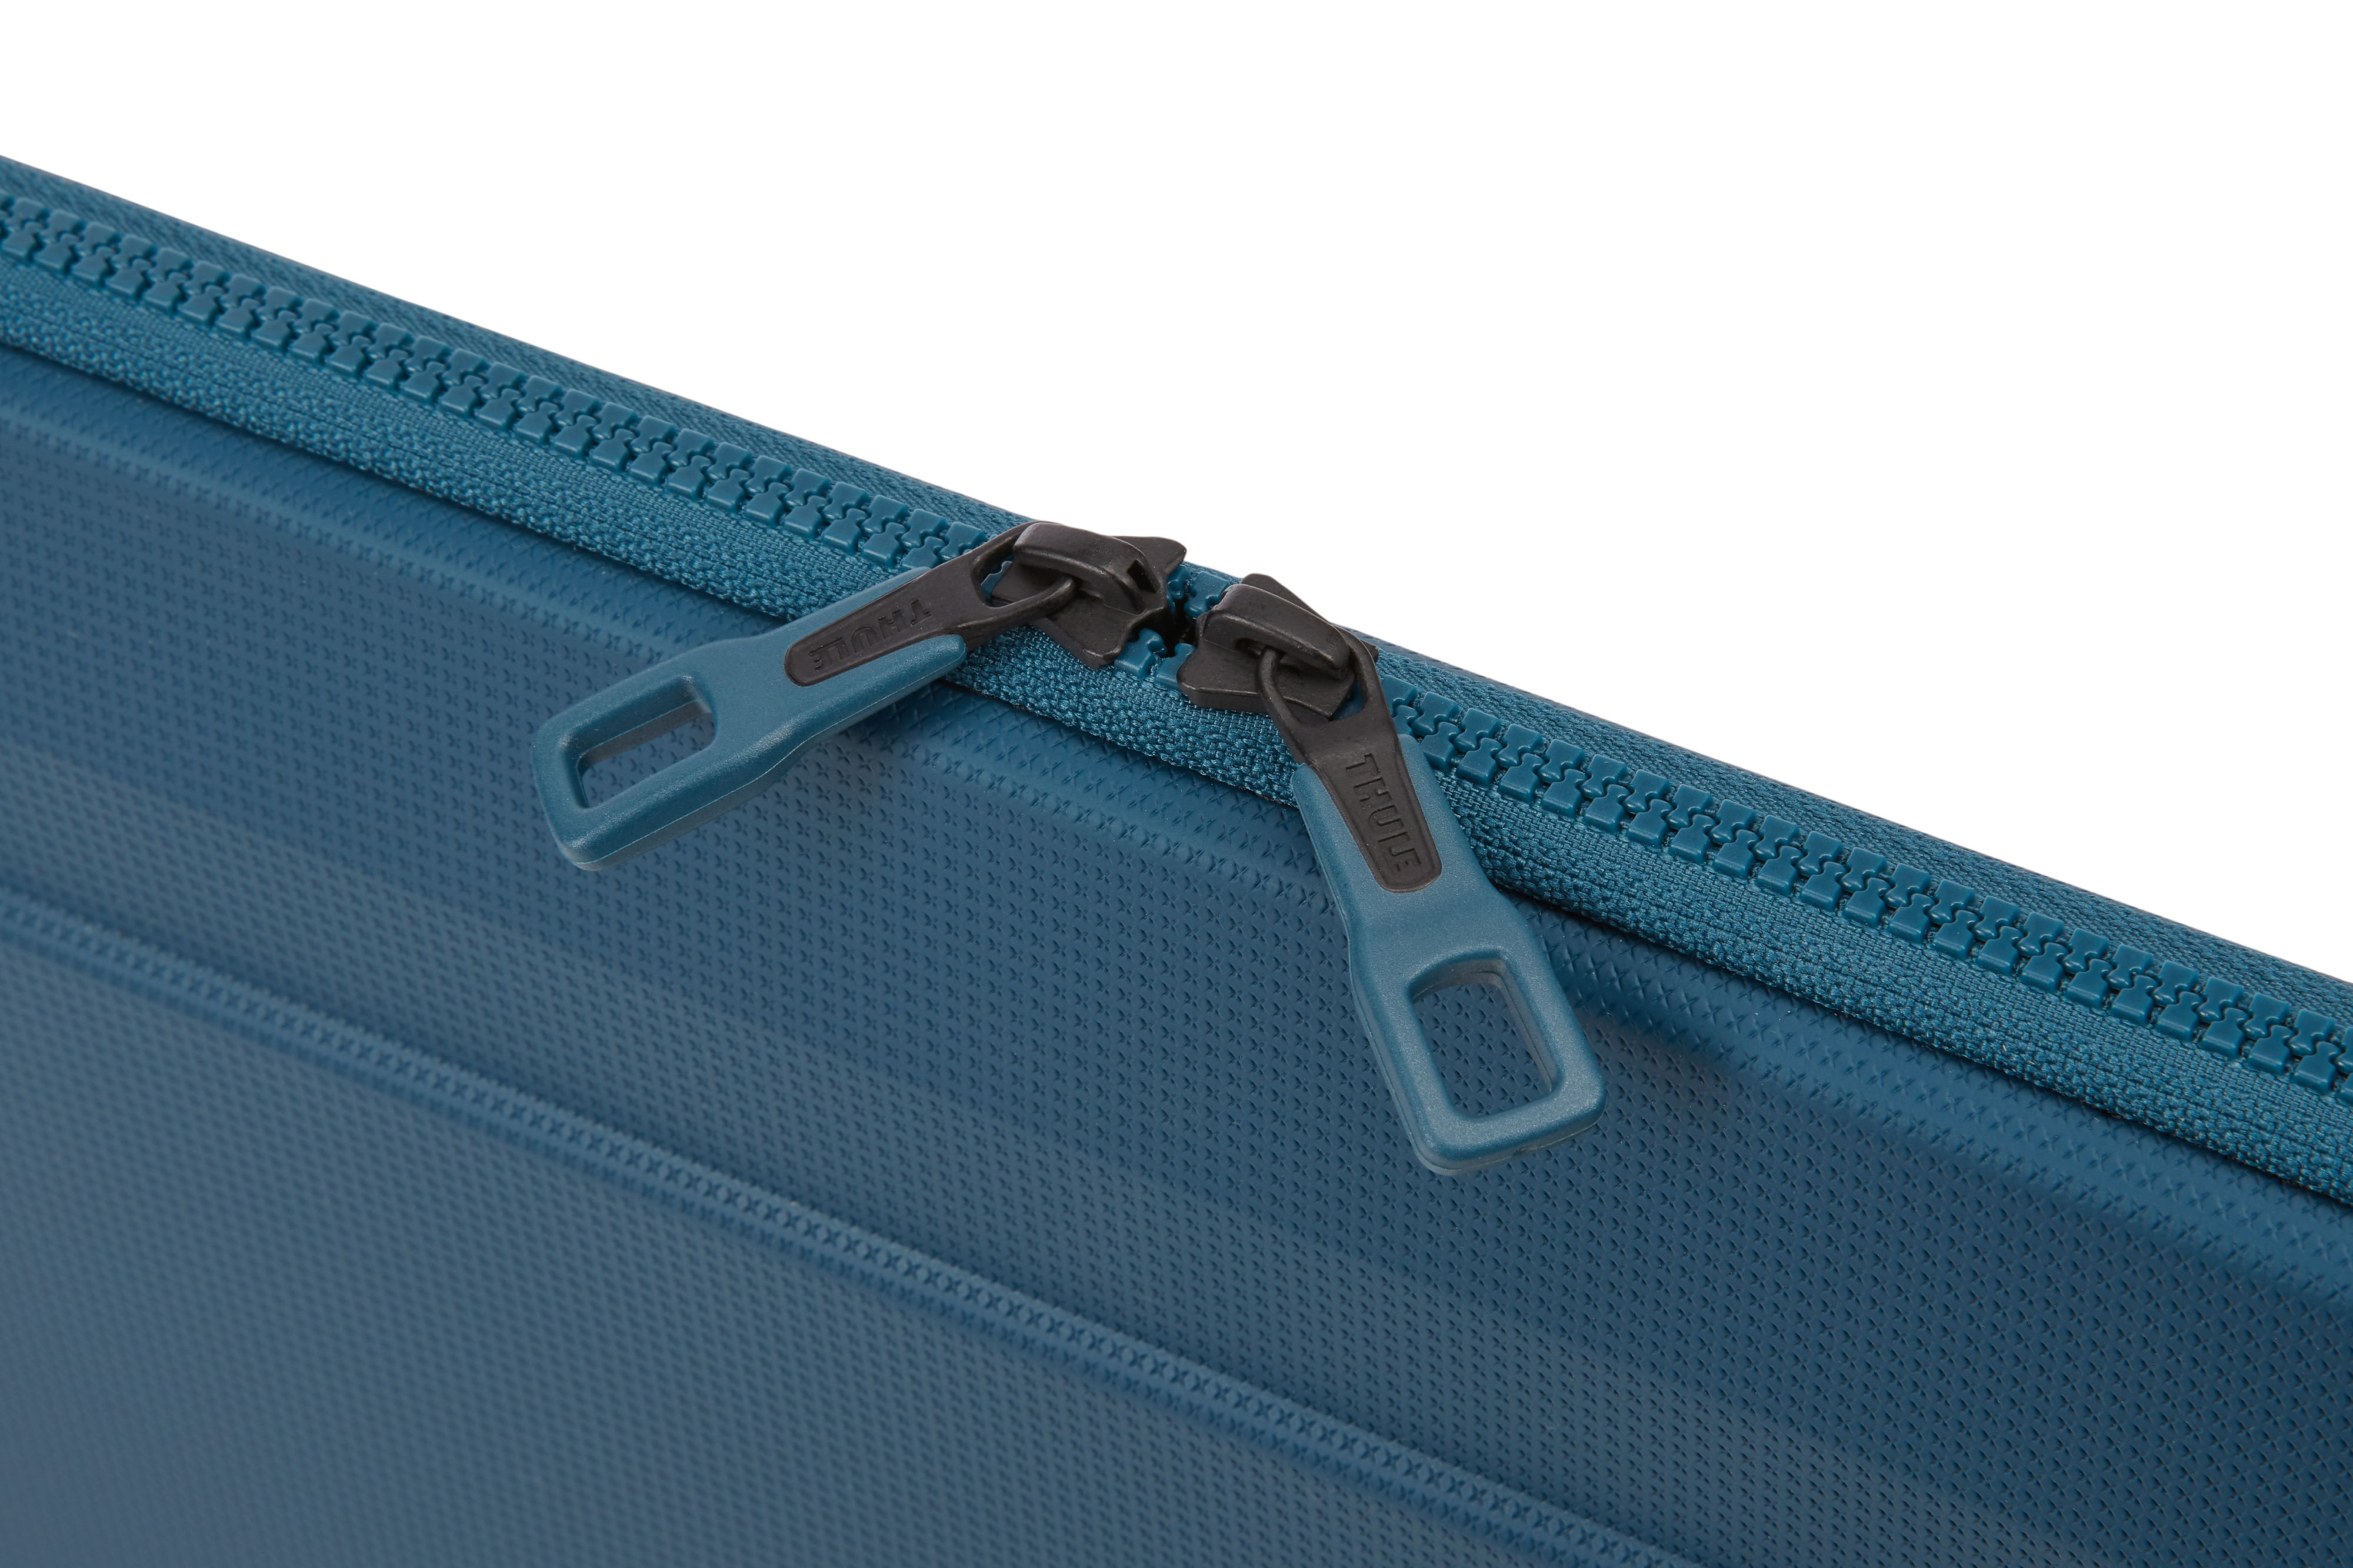 THULE Gauntlet Universal Blau Notebooksleeve Sleeve für Polyurethan